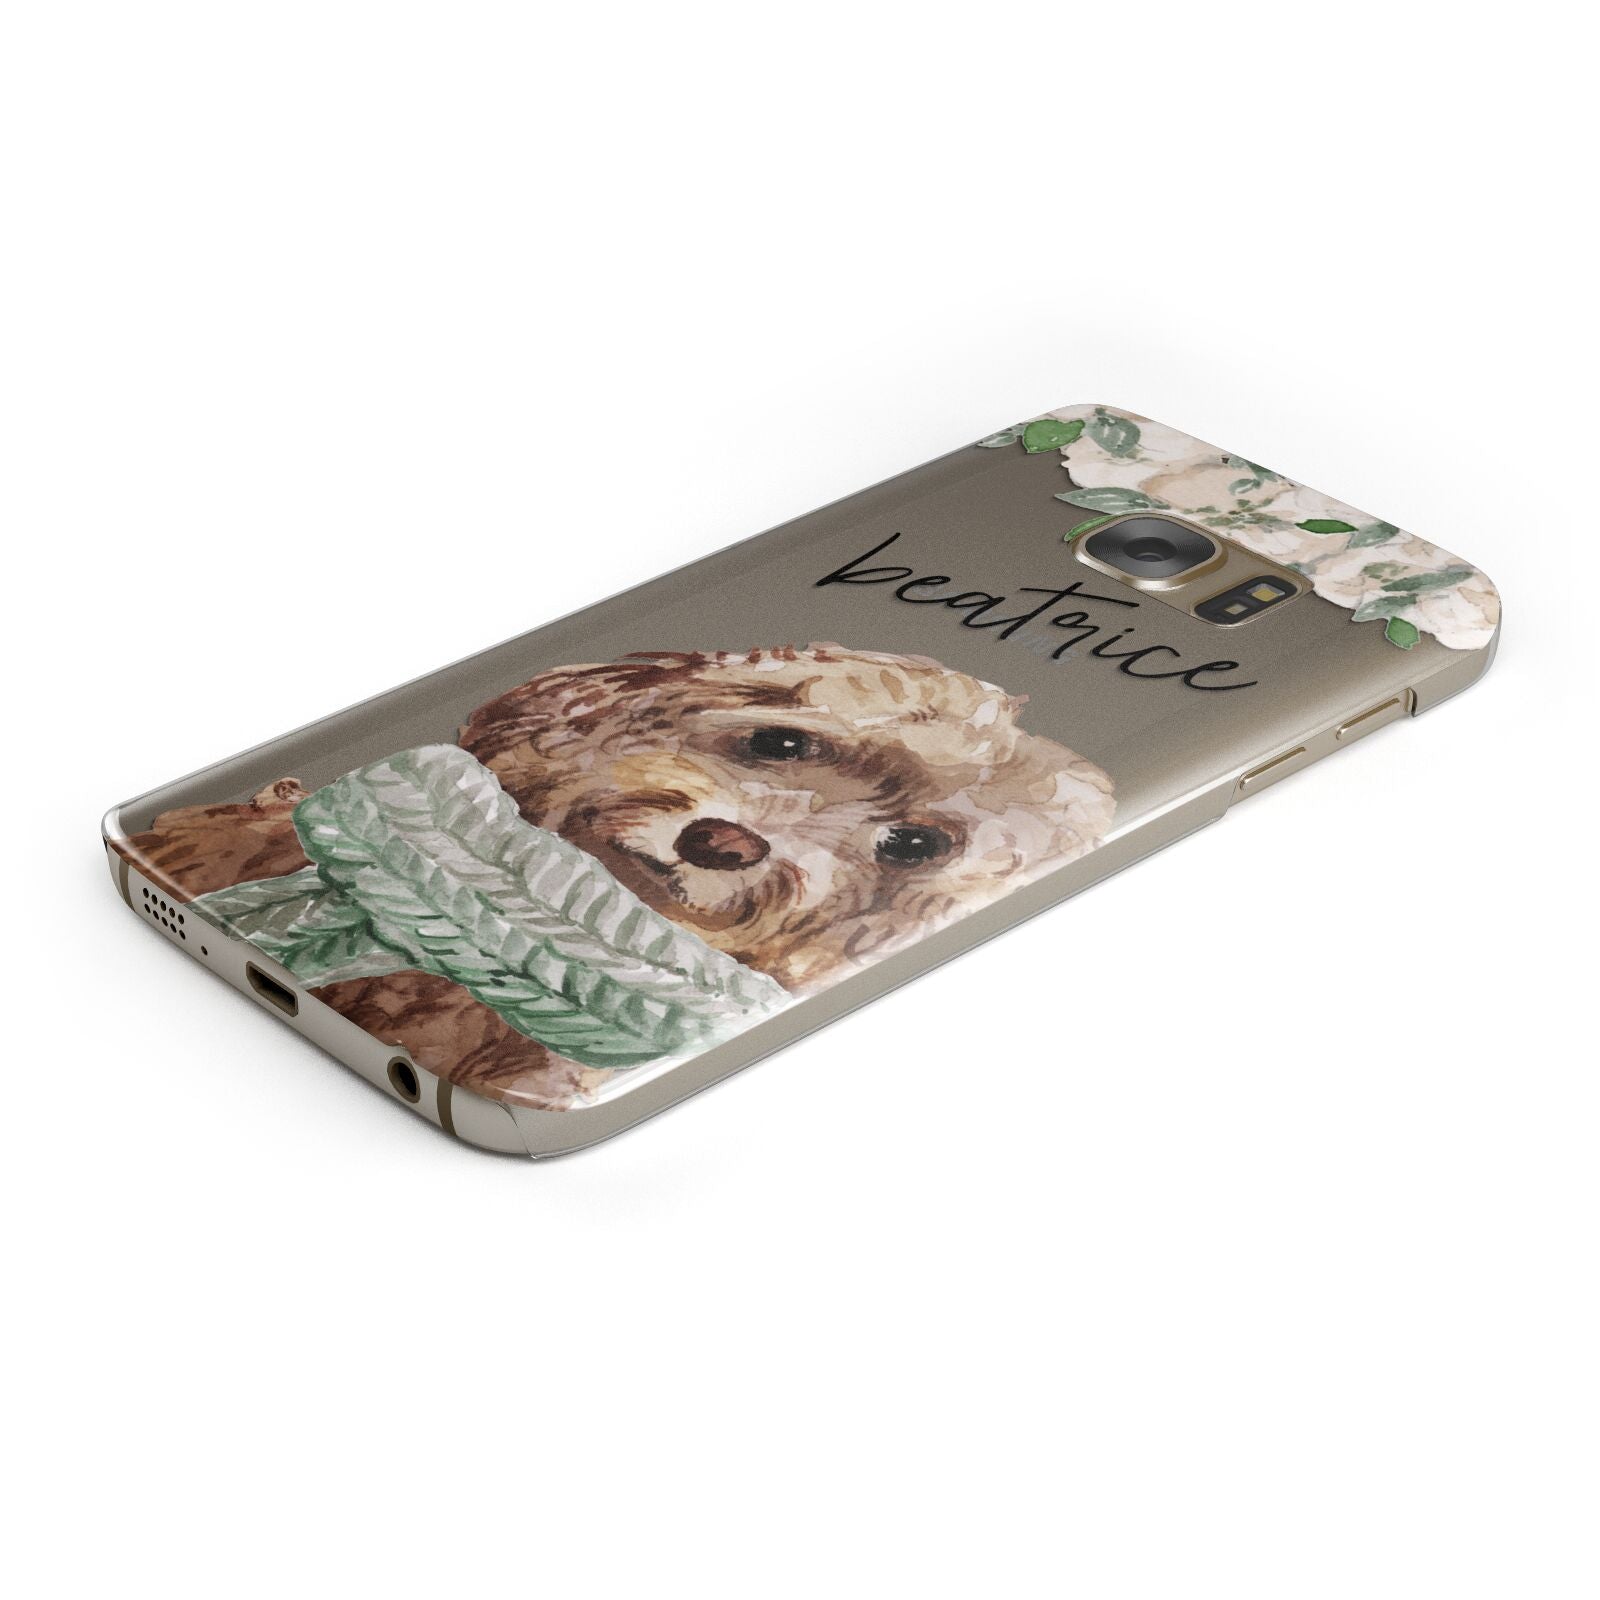 Personalised Cockapoo Dog Protective Samsung Galaxy Case Angled Image